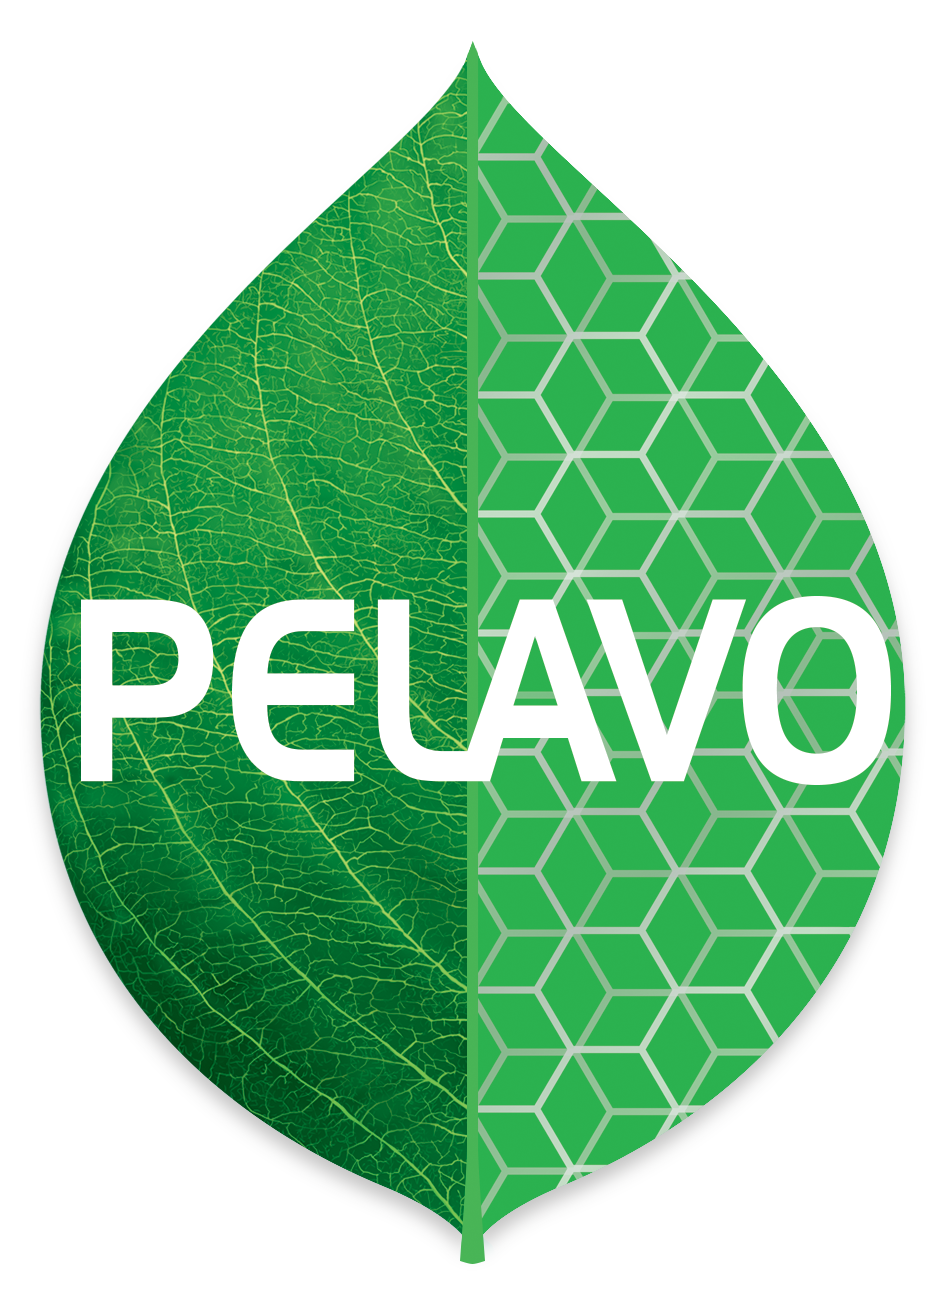 Pelavo logo